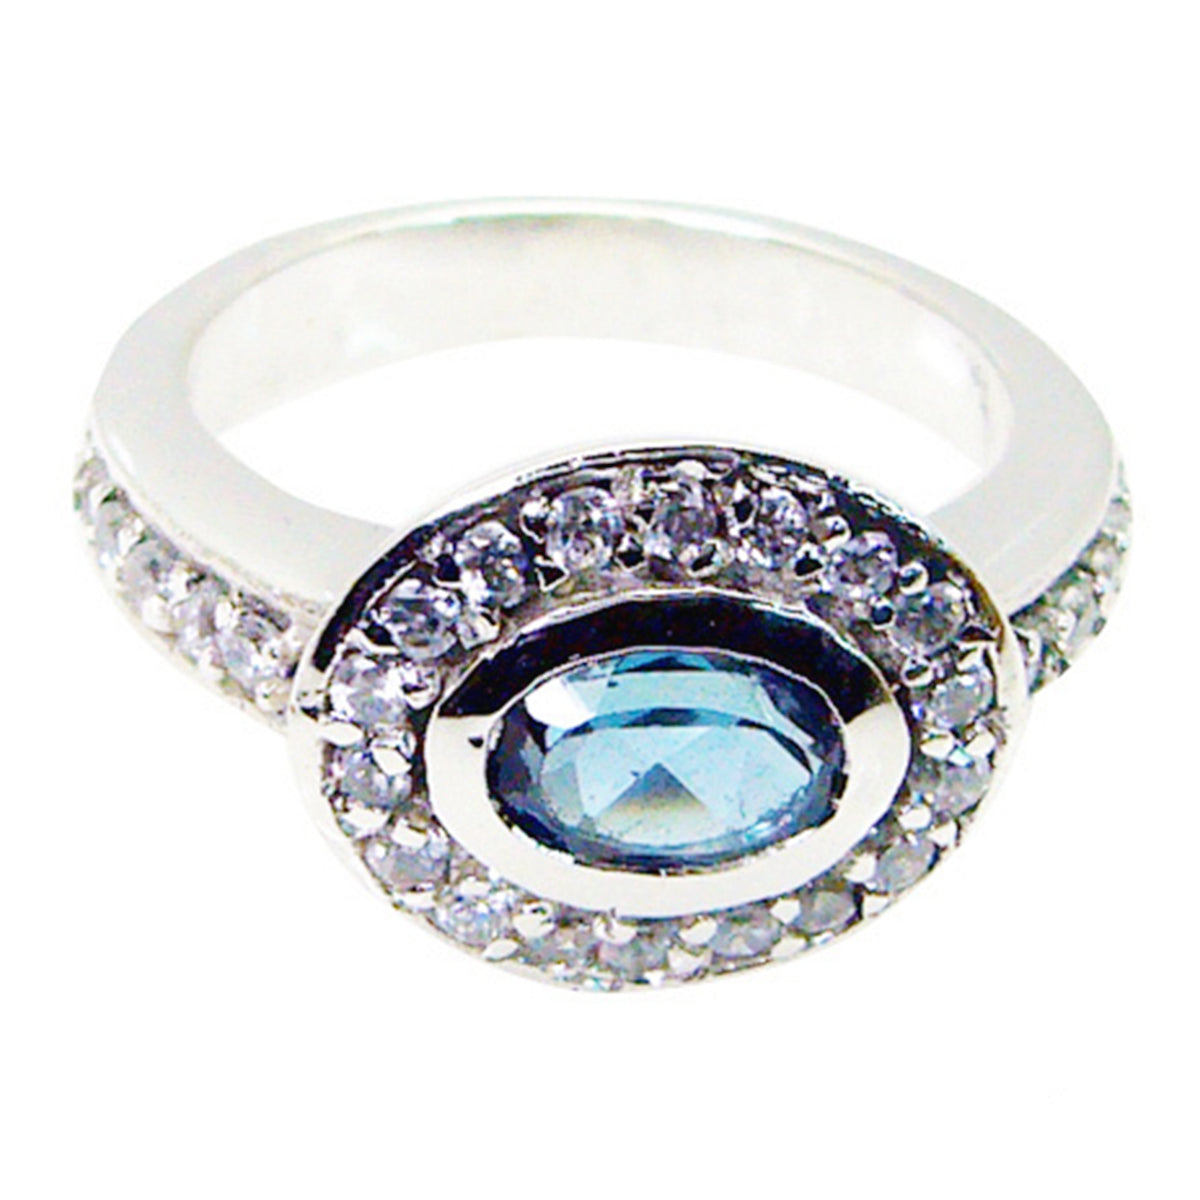 Riyo Desirable Gem Blue Topaz Silver Rings Mickey Mouse Jewelry